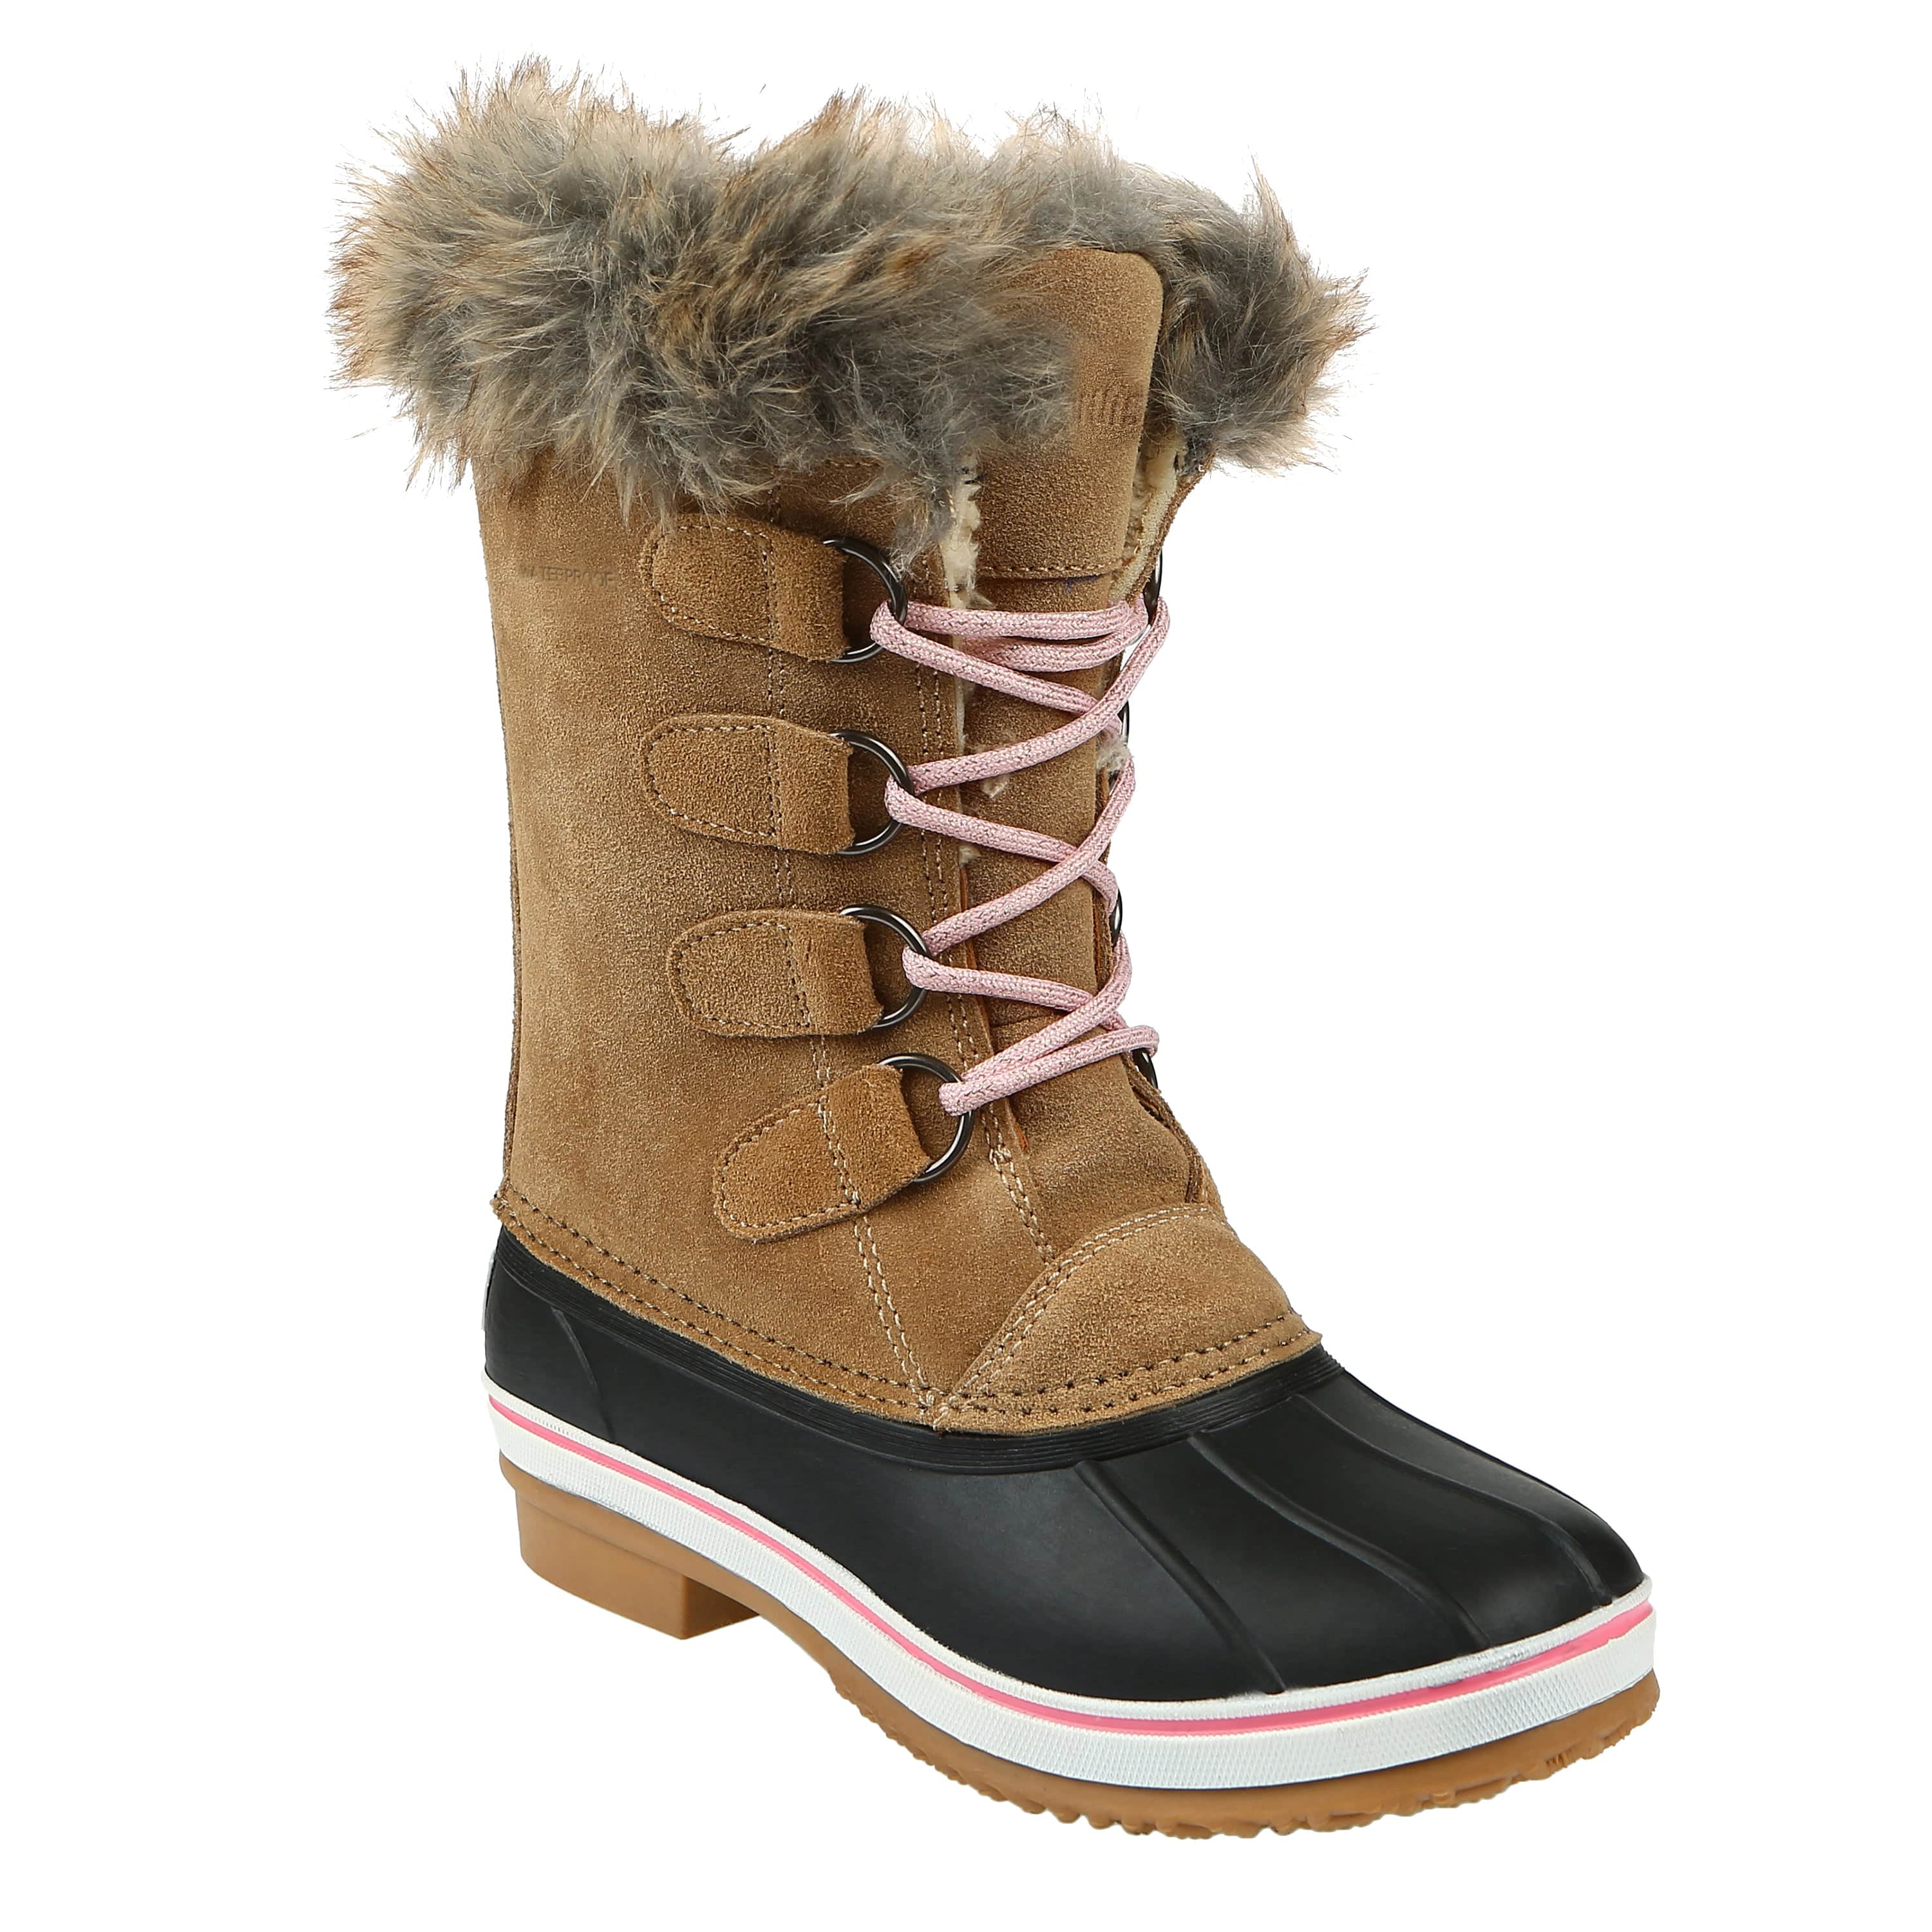 girls snow boots, kids snow boots, cute snowboots for girls